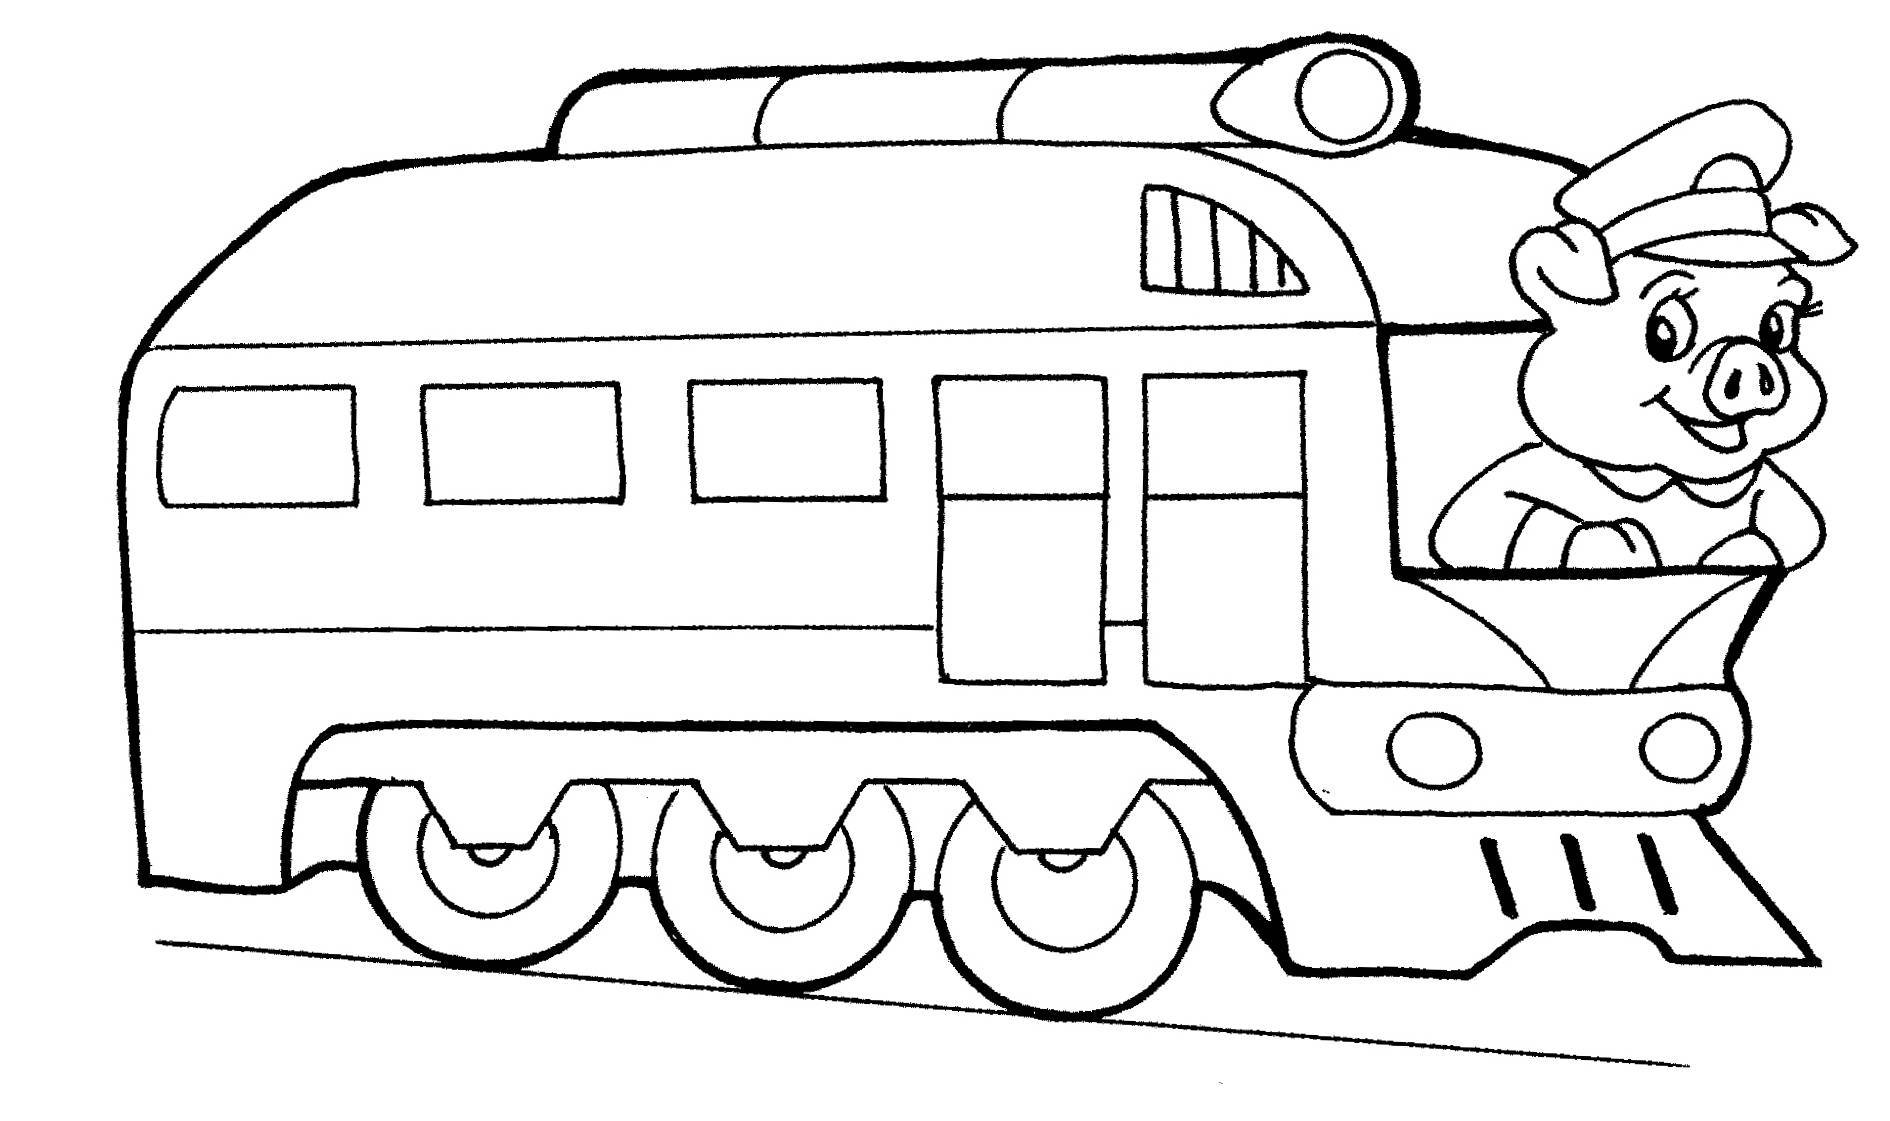 Steam locomotive with a pig